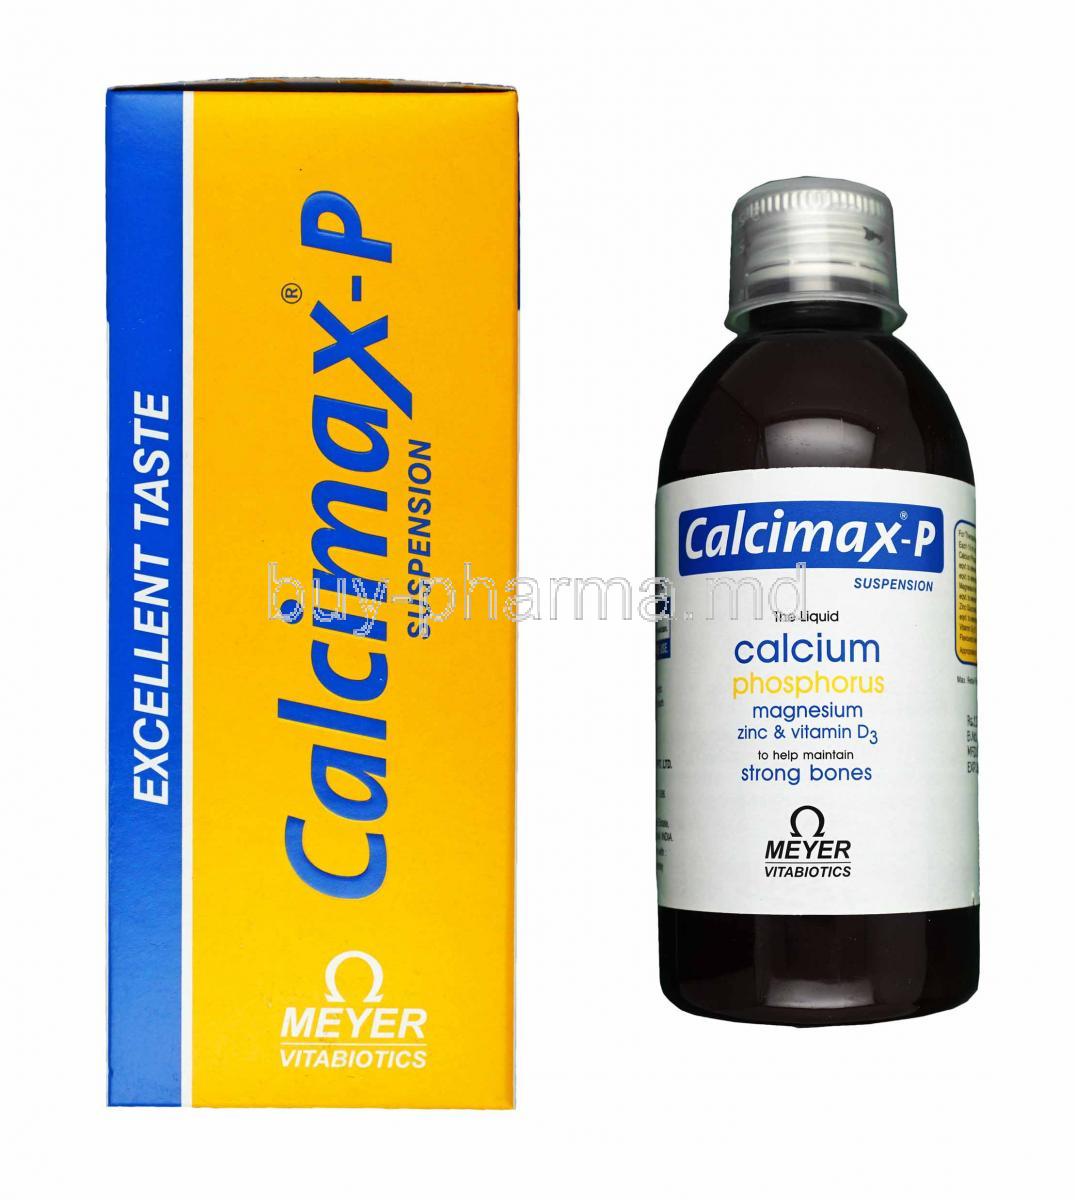 Calcimax-P Suspension box and bottle